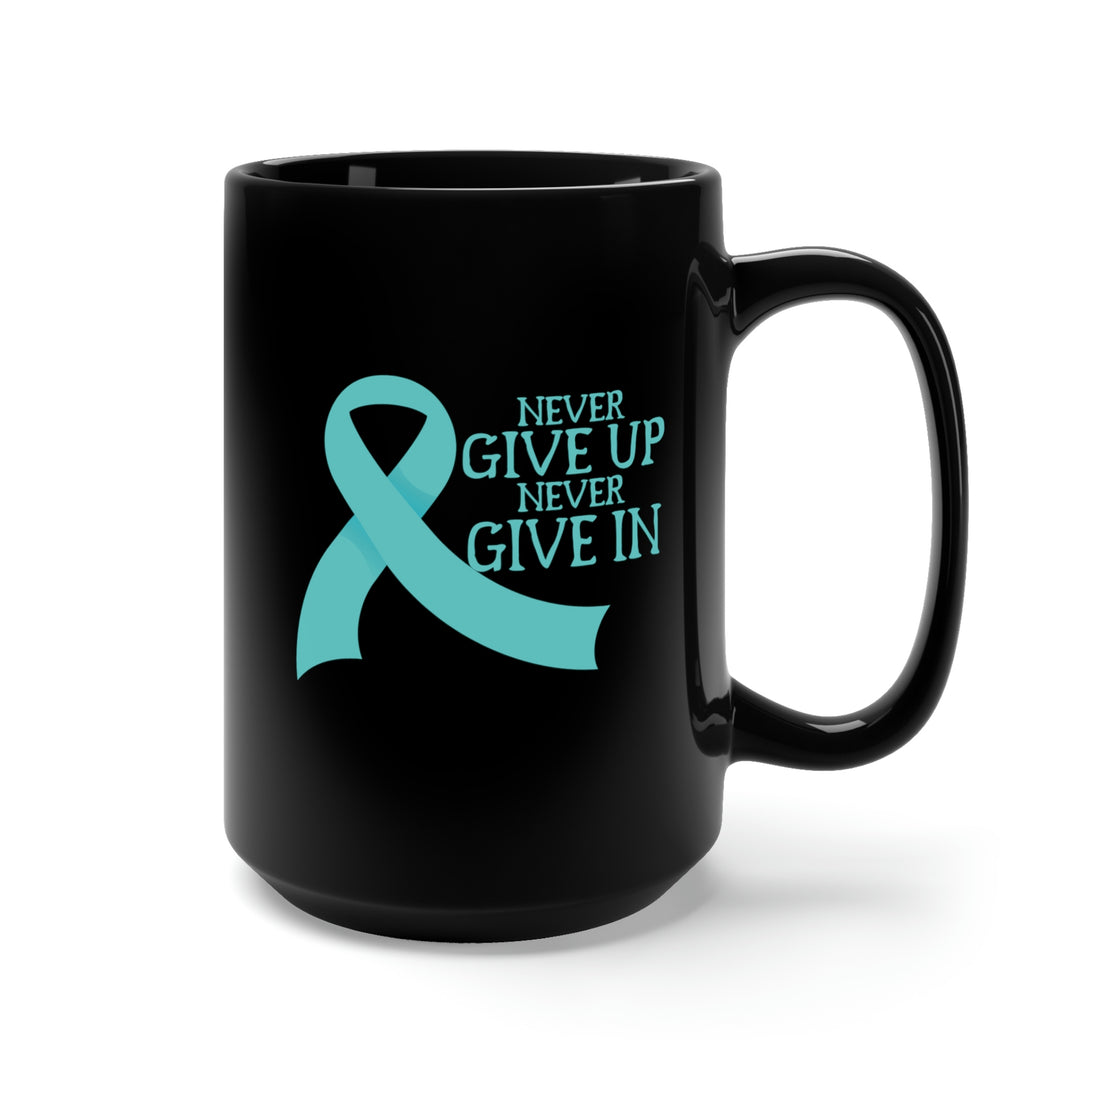 Never Give Up Never Give In - Large 15oz Black Mug